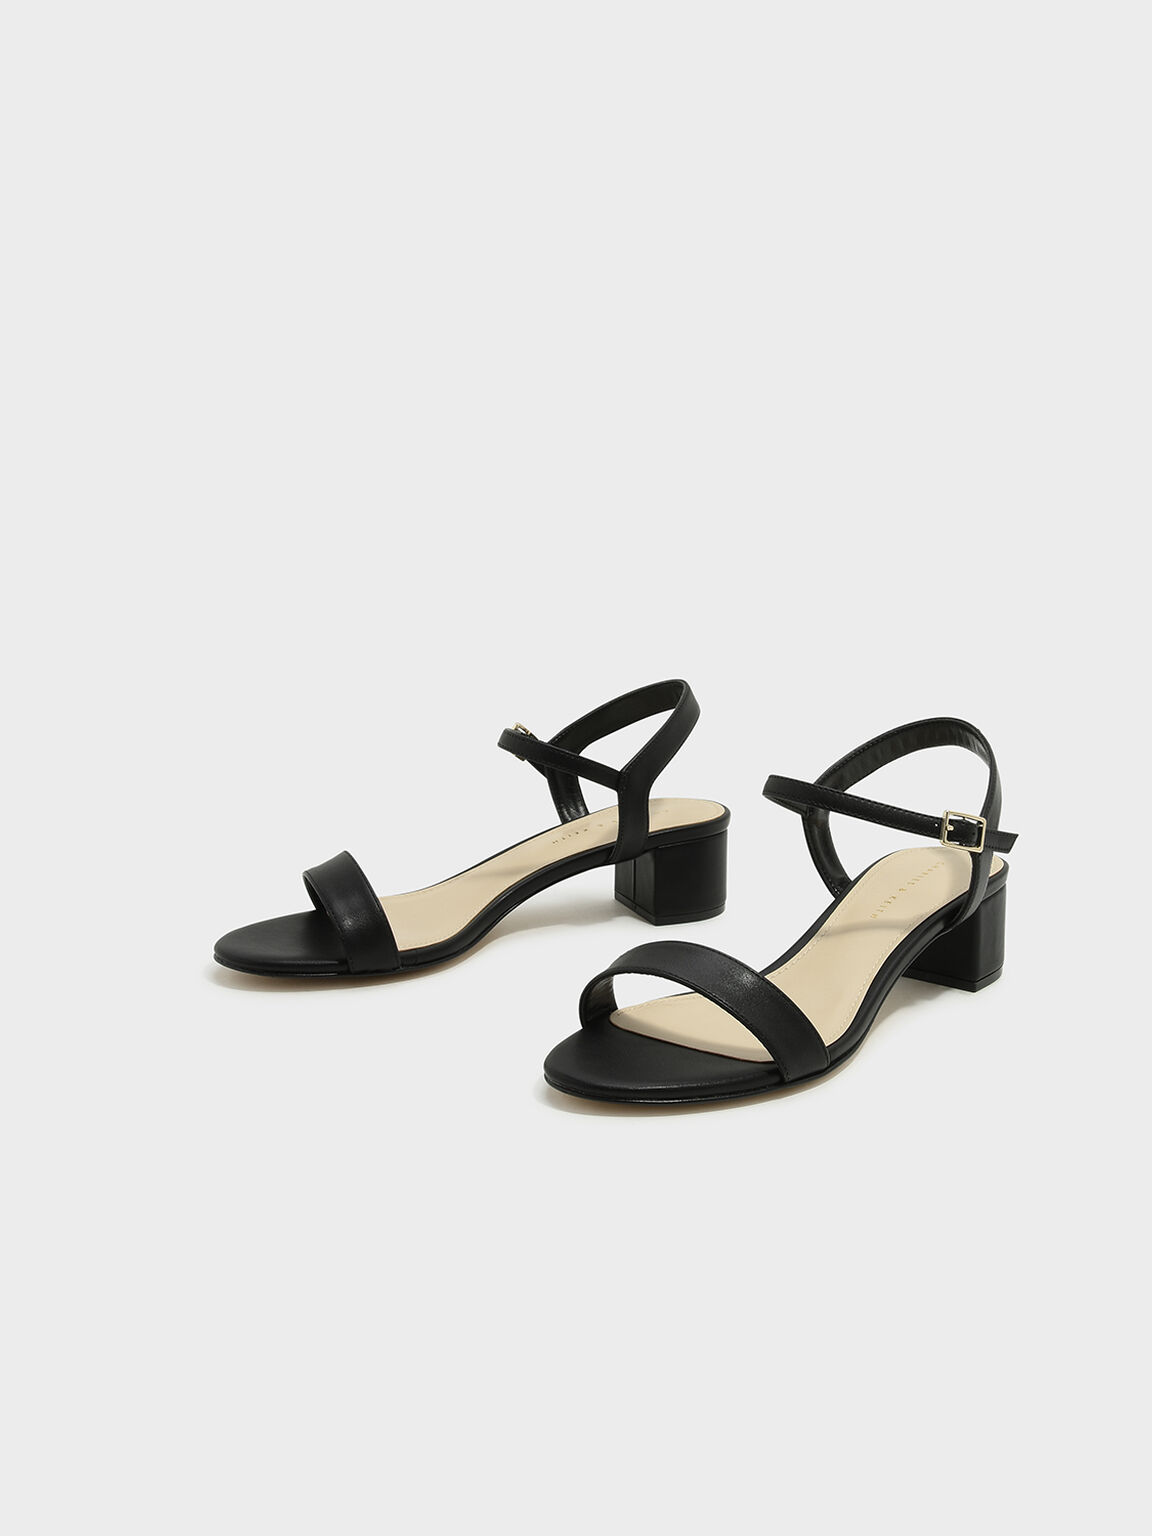 Basic Open-Toe Sandals, Black, hi-res